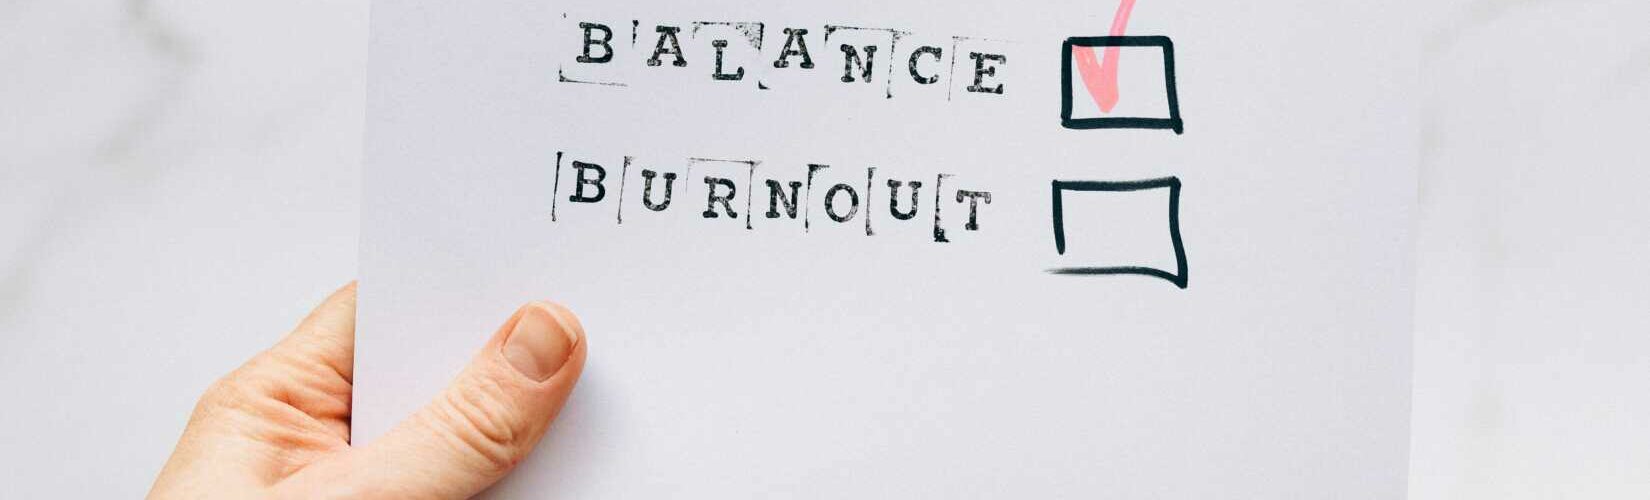 burnout or balance.